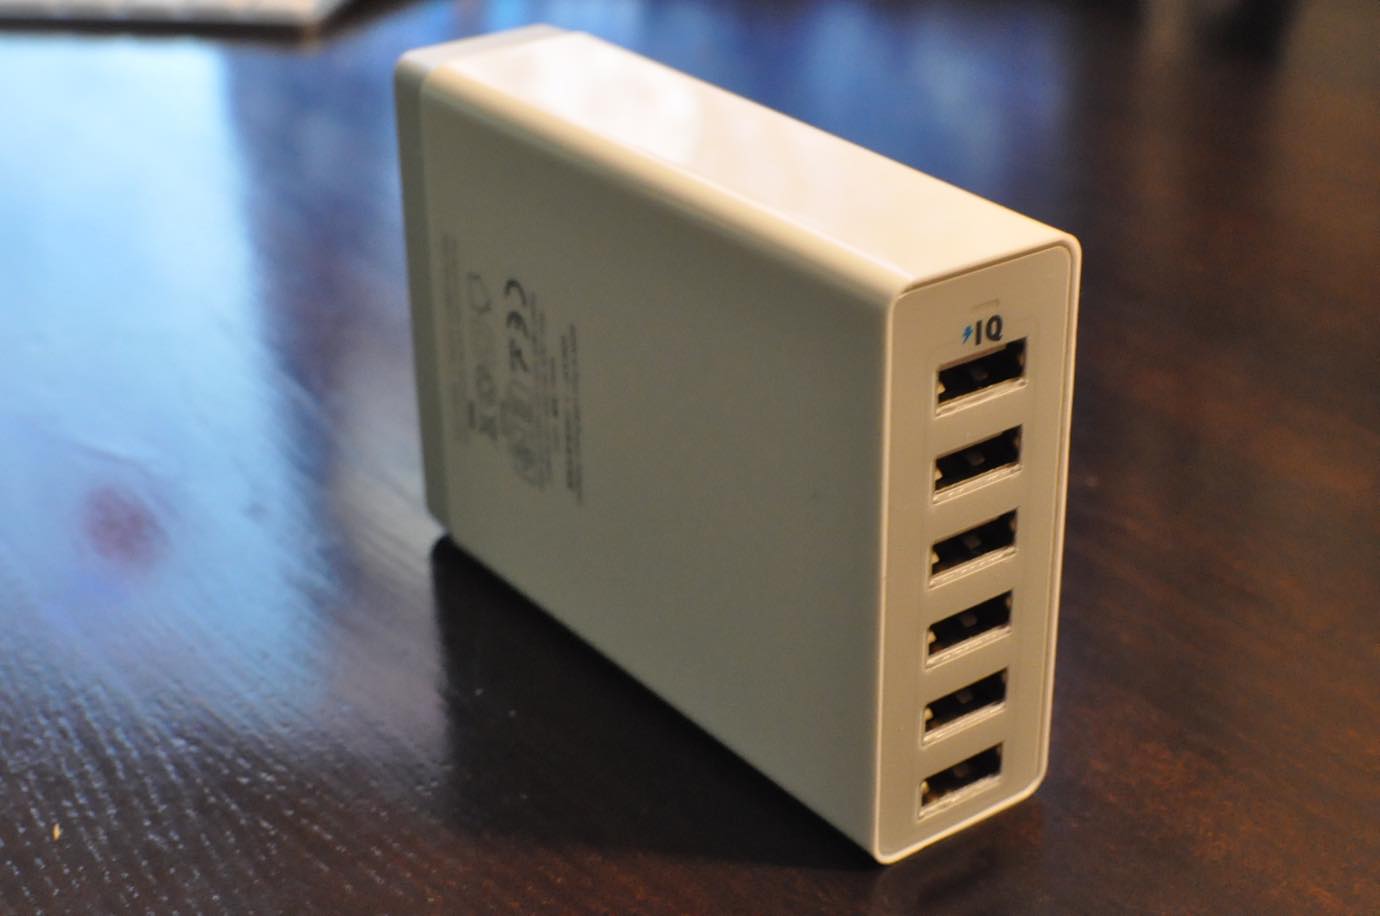 Anker 60W 6ポート USB急速充電器 15 20150808 135911